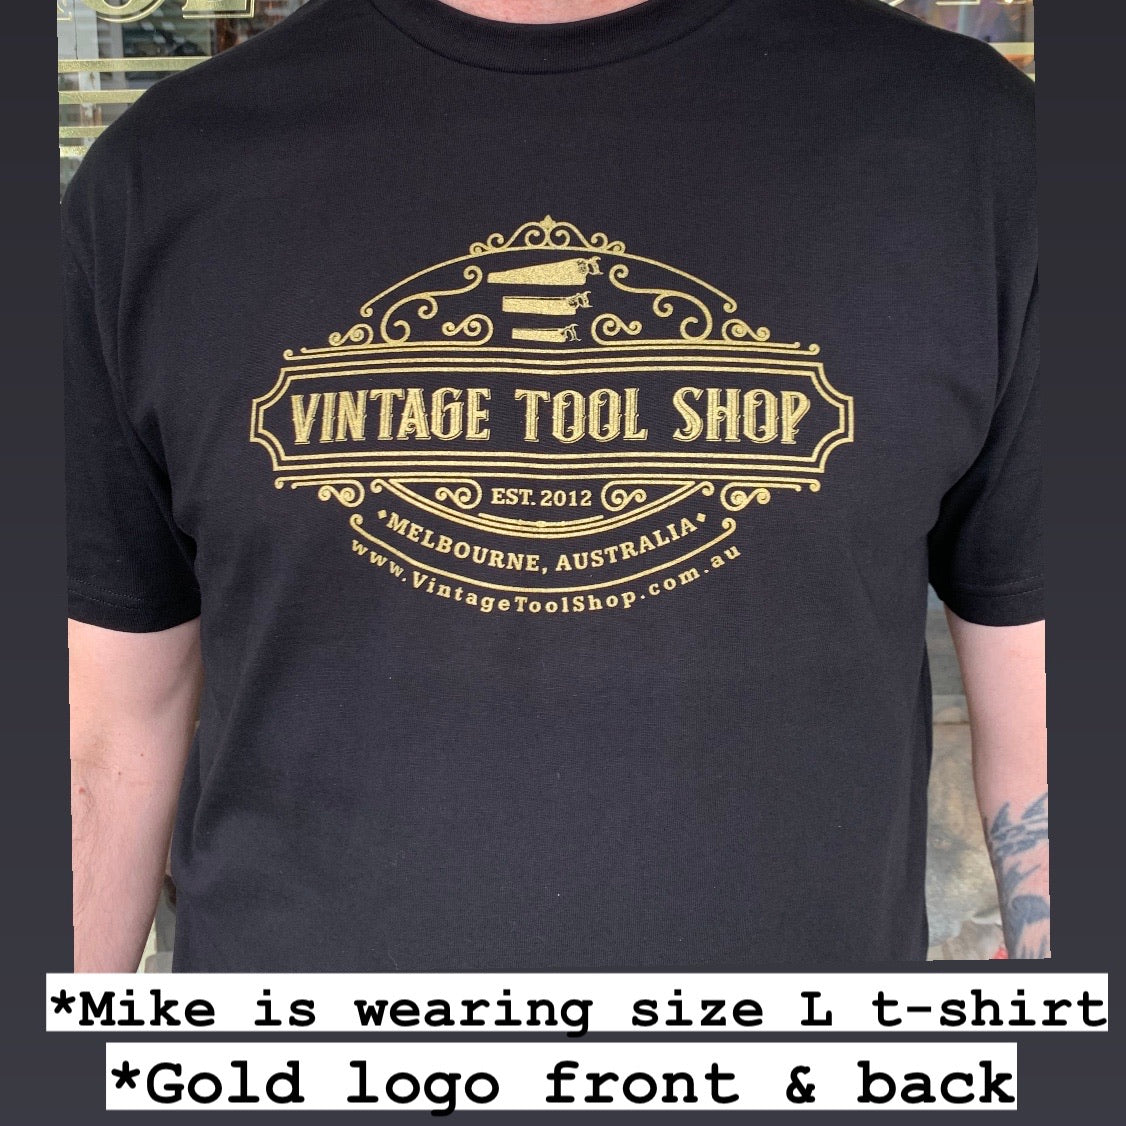 Black VINTAGE TOOL SHOP Gold logo 100% Cotton T-SHIRT Size S-3XL